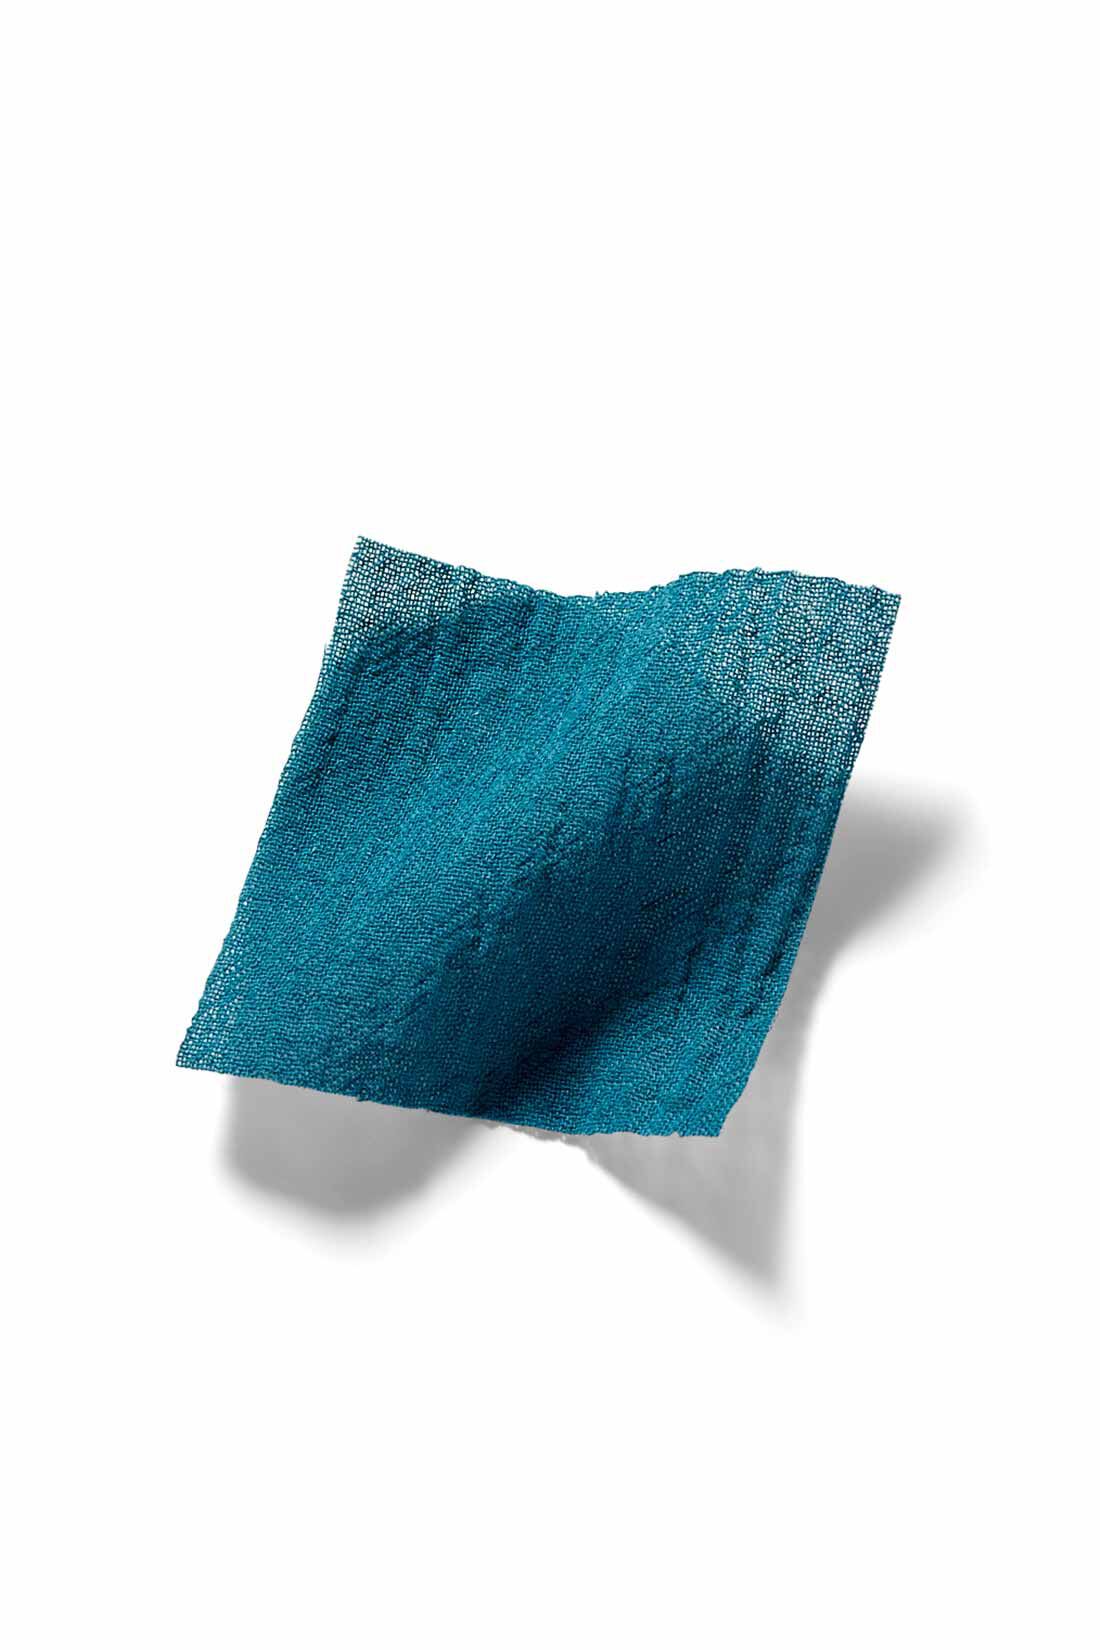 Real Stock|IEDIT[イディット]　楊柳（ようりゅう）コットン素材のティアードロングブラウス〈ブルーグリーン〉|夏の素肌にうれしい綿100％。今年らしいほんのり透け感と表面にシボ感のある薄手の楊柳素材を使用。